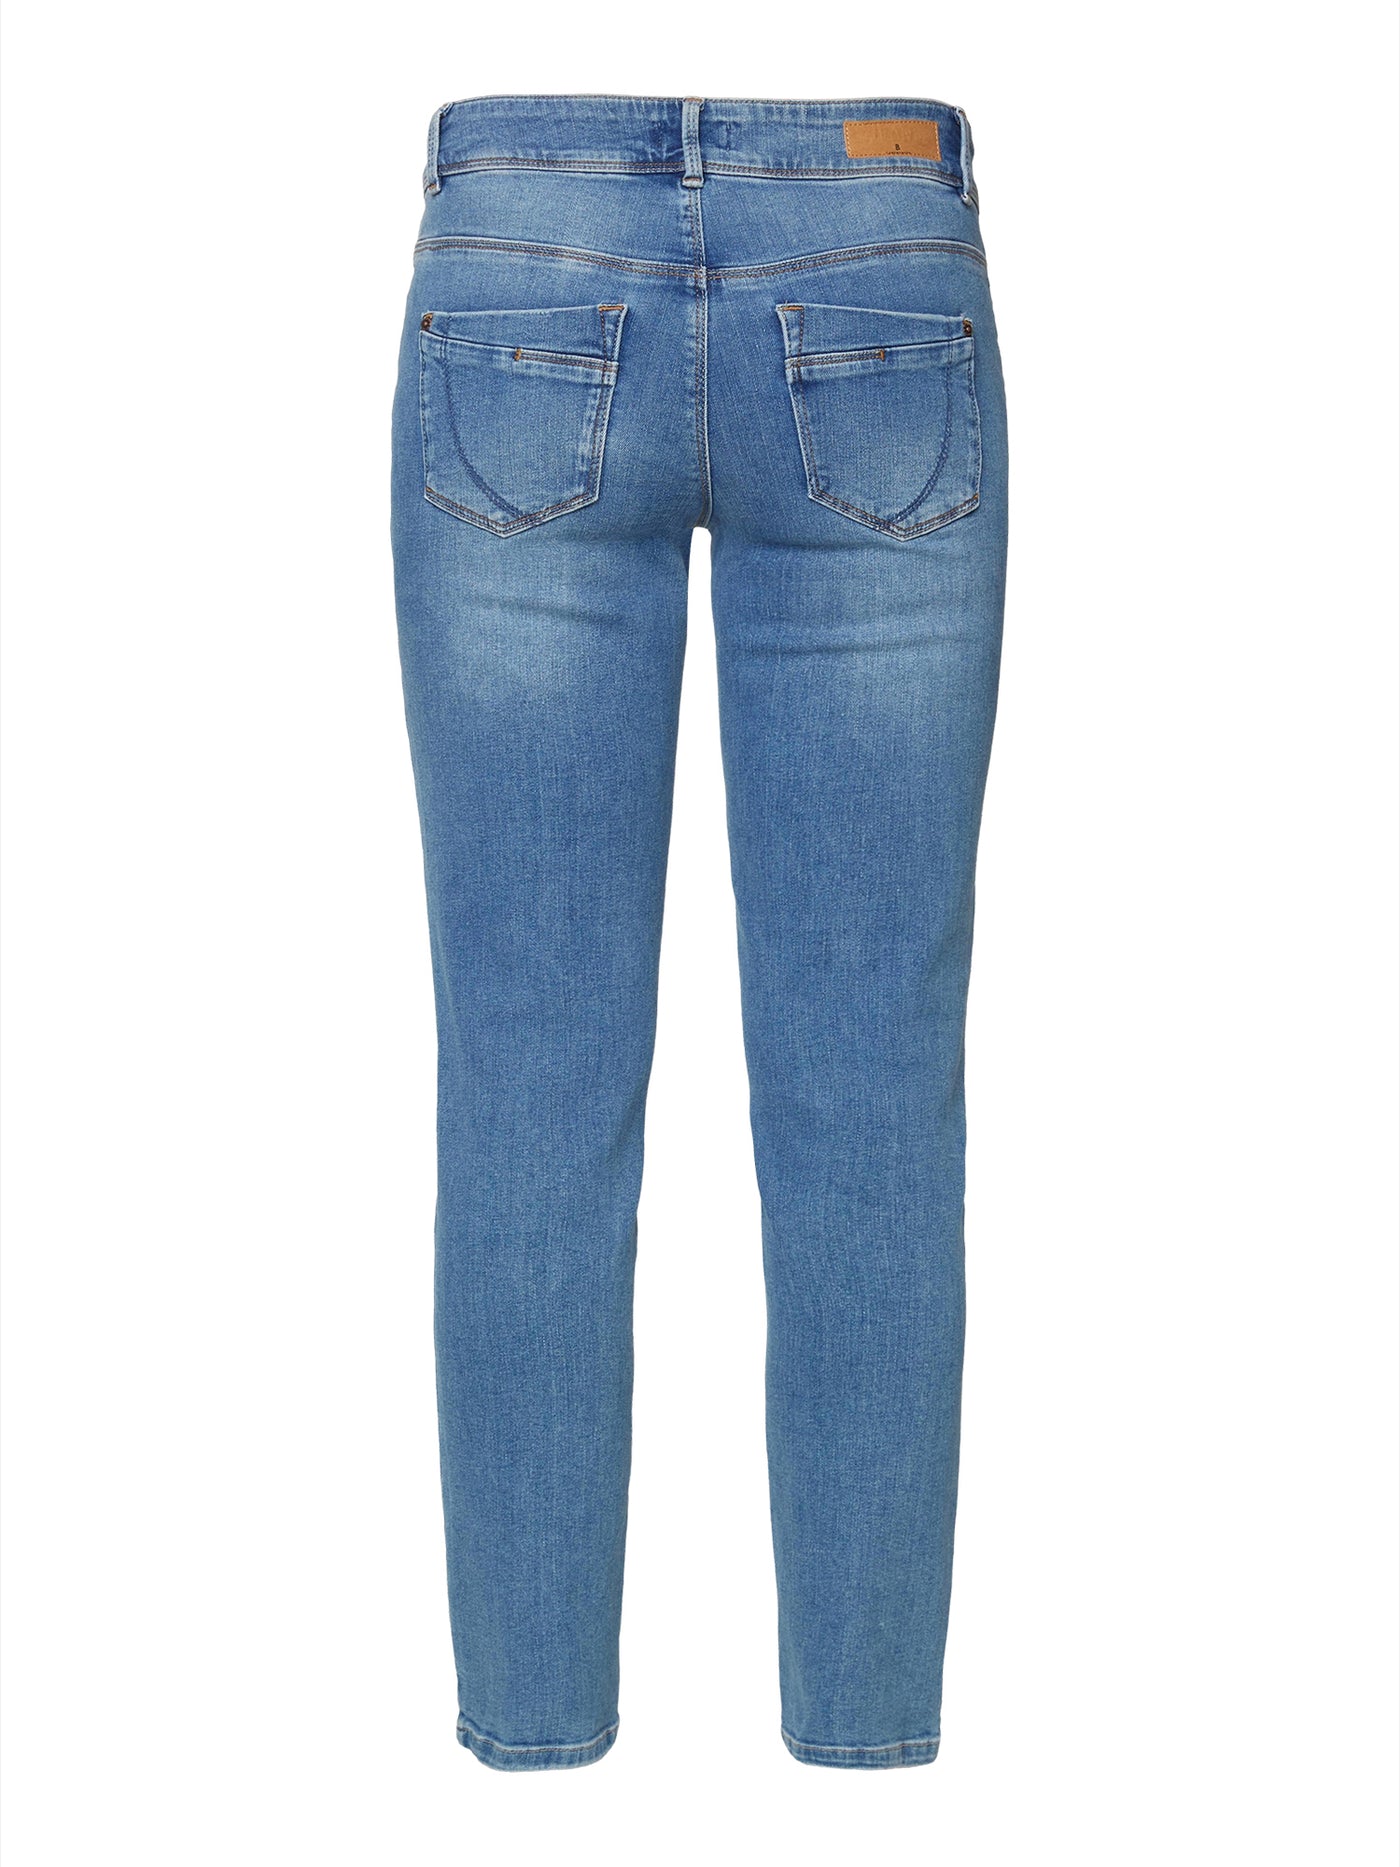 Jeans Hannah Straight Legs - Light Blue Denim